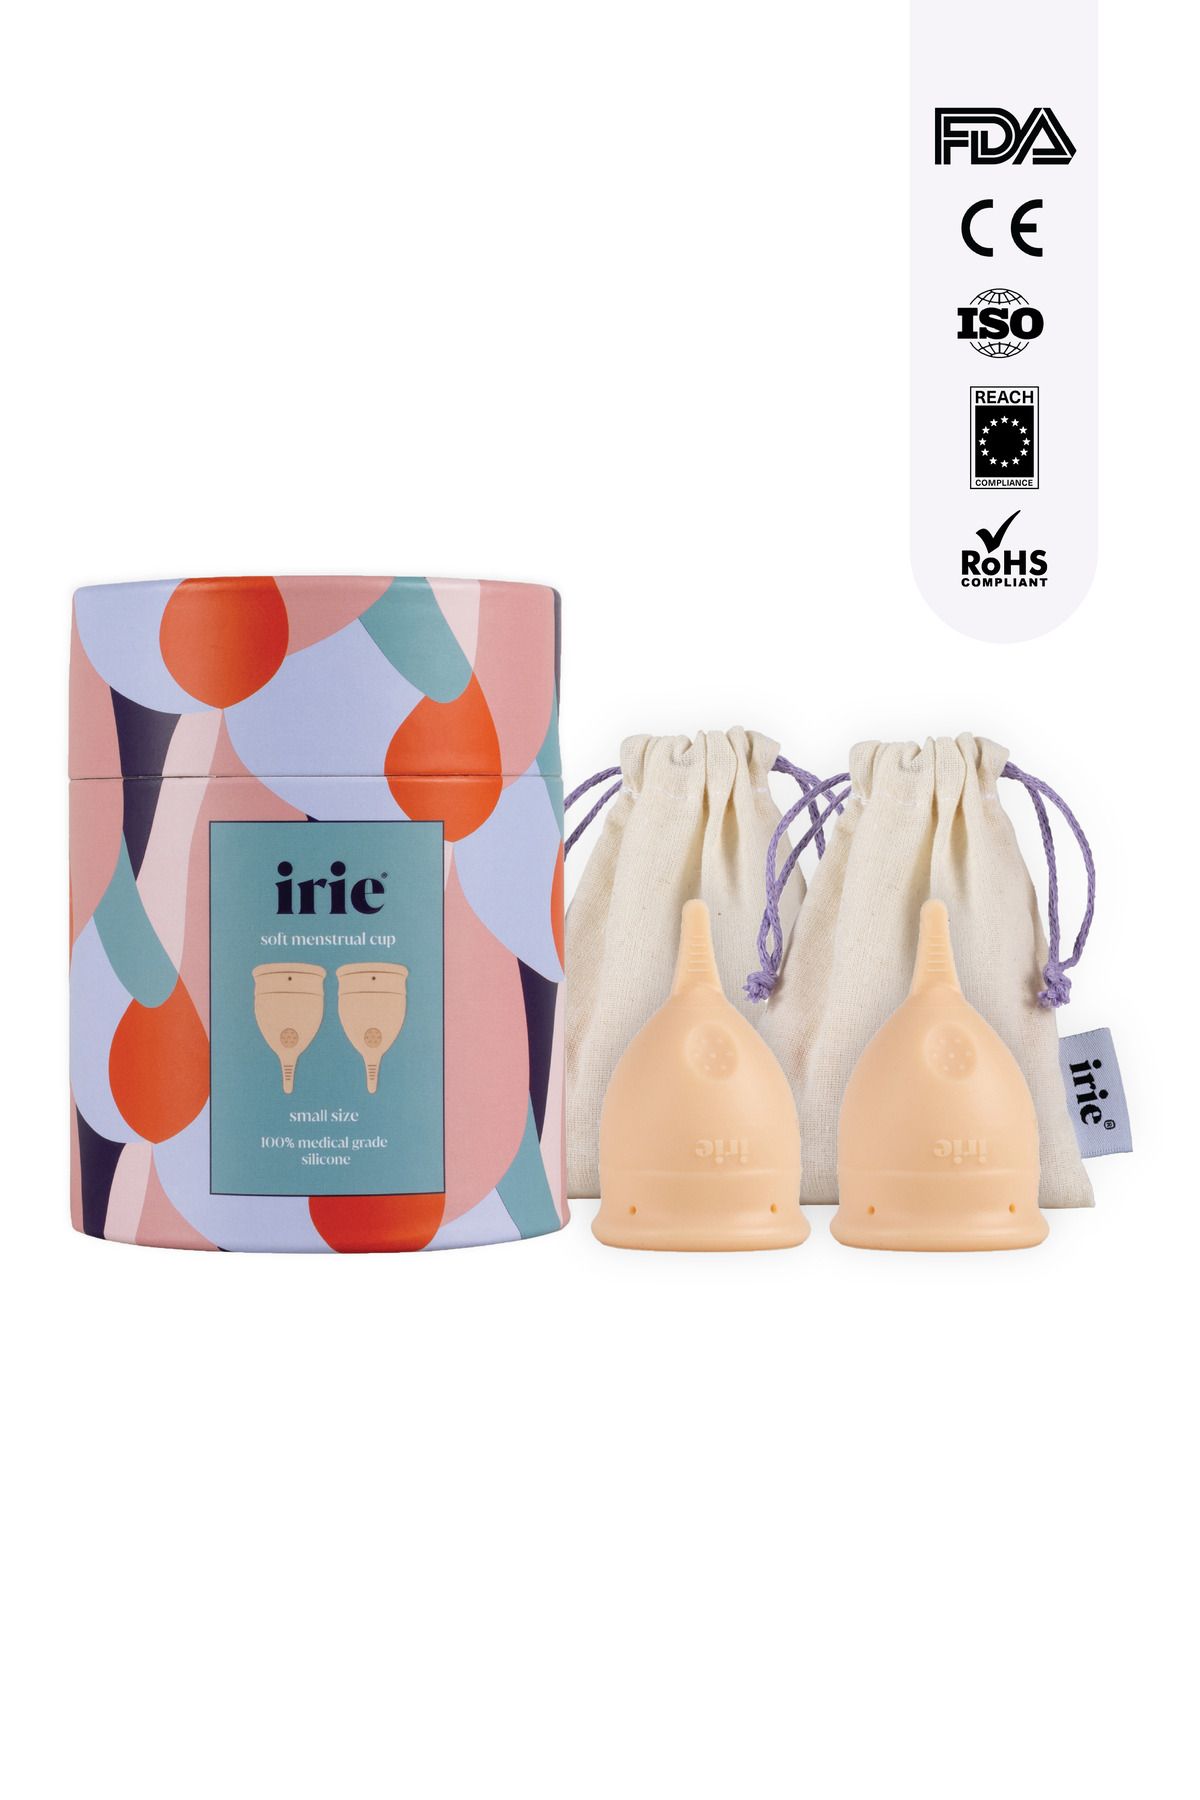 irie Adet Kabı Regl Kabı Menstrüel Kap Menstrual Cup 2'li Paket [[Small Small]] Alman Medikal Silikon